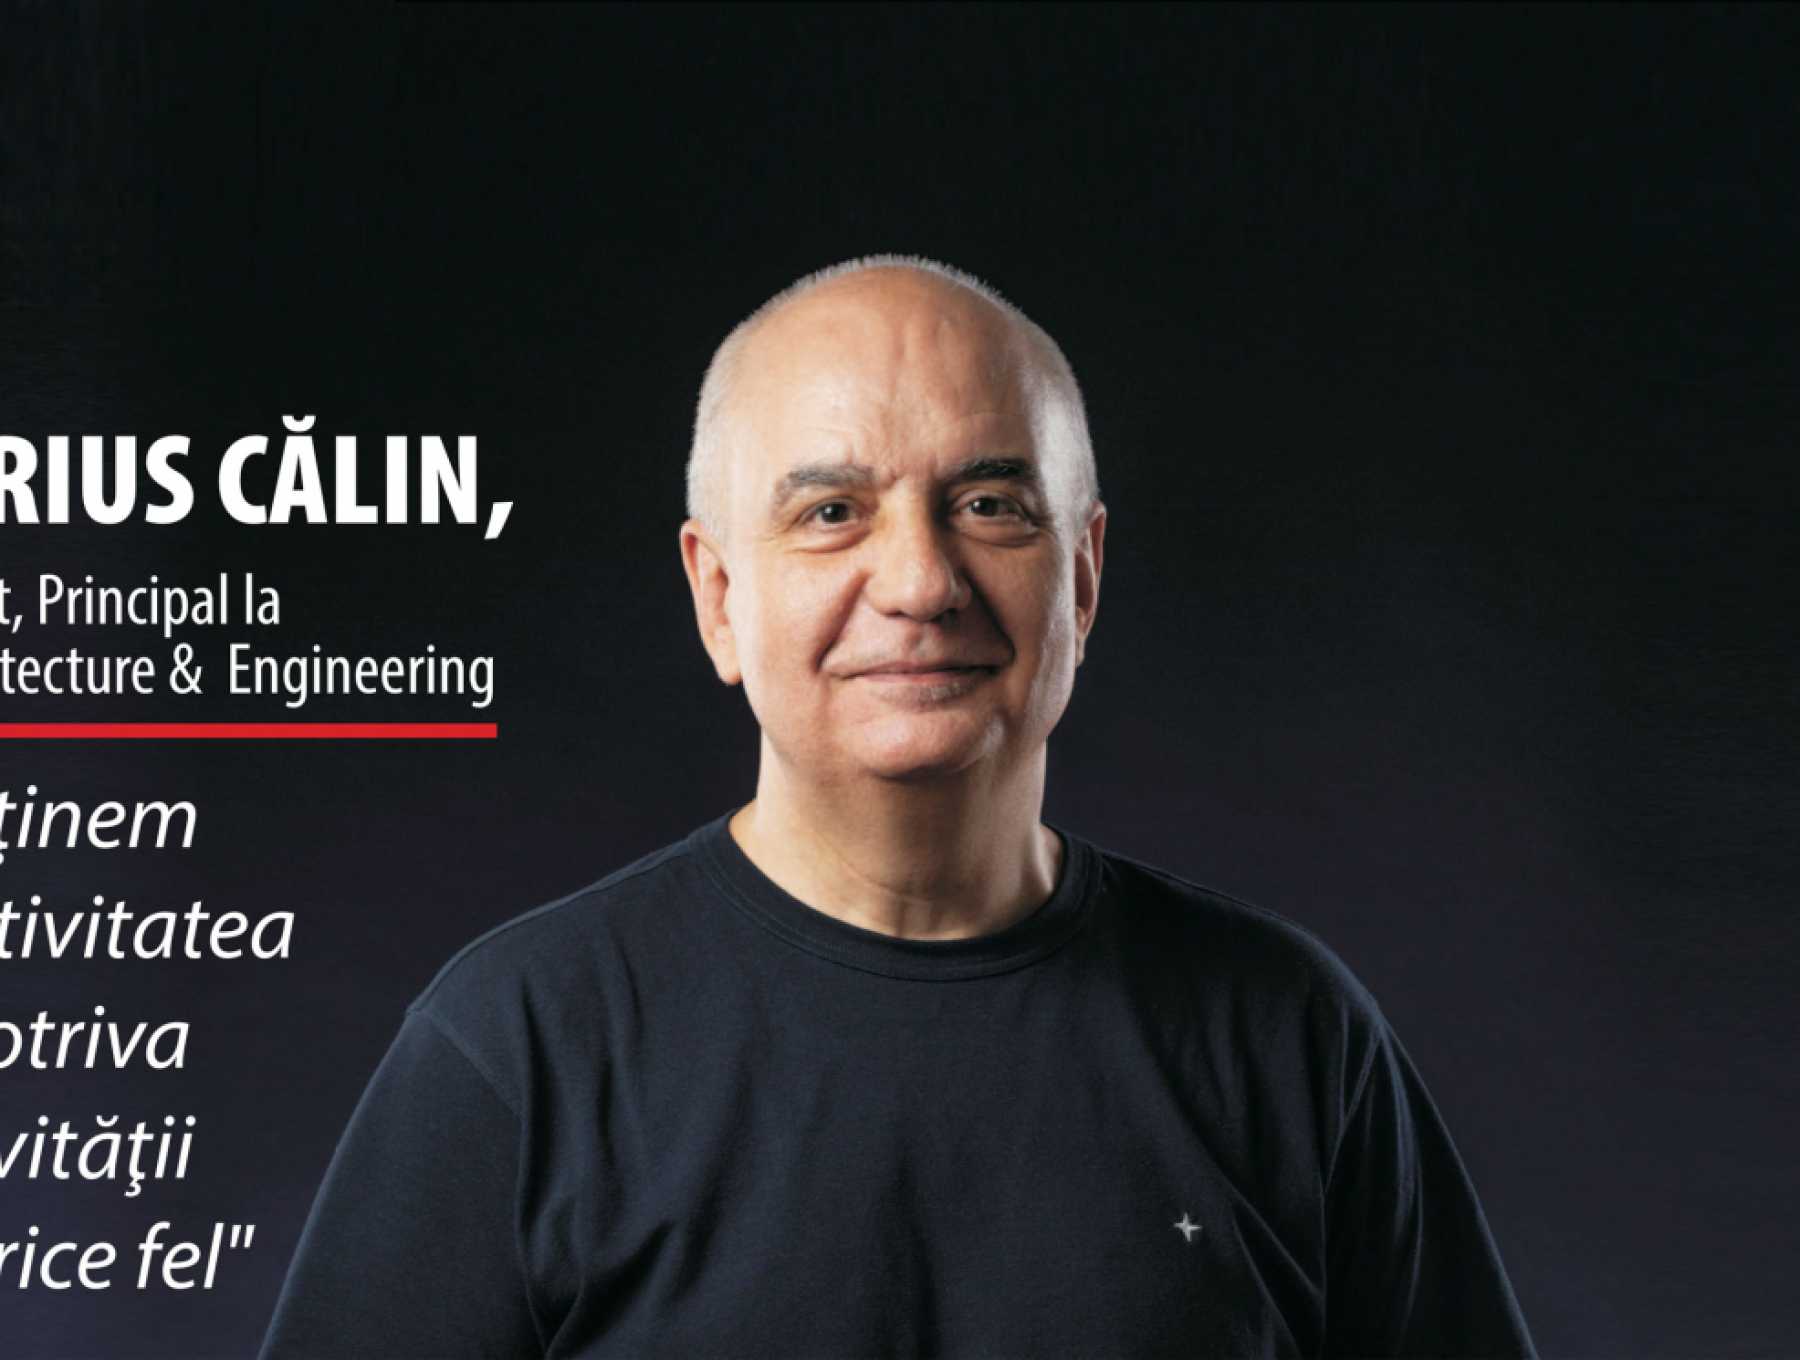 Marius Călin from X Architecture & Engineering on the cover of Bursa magazine